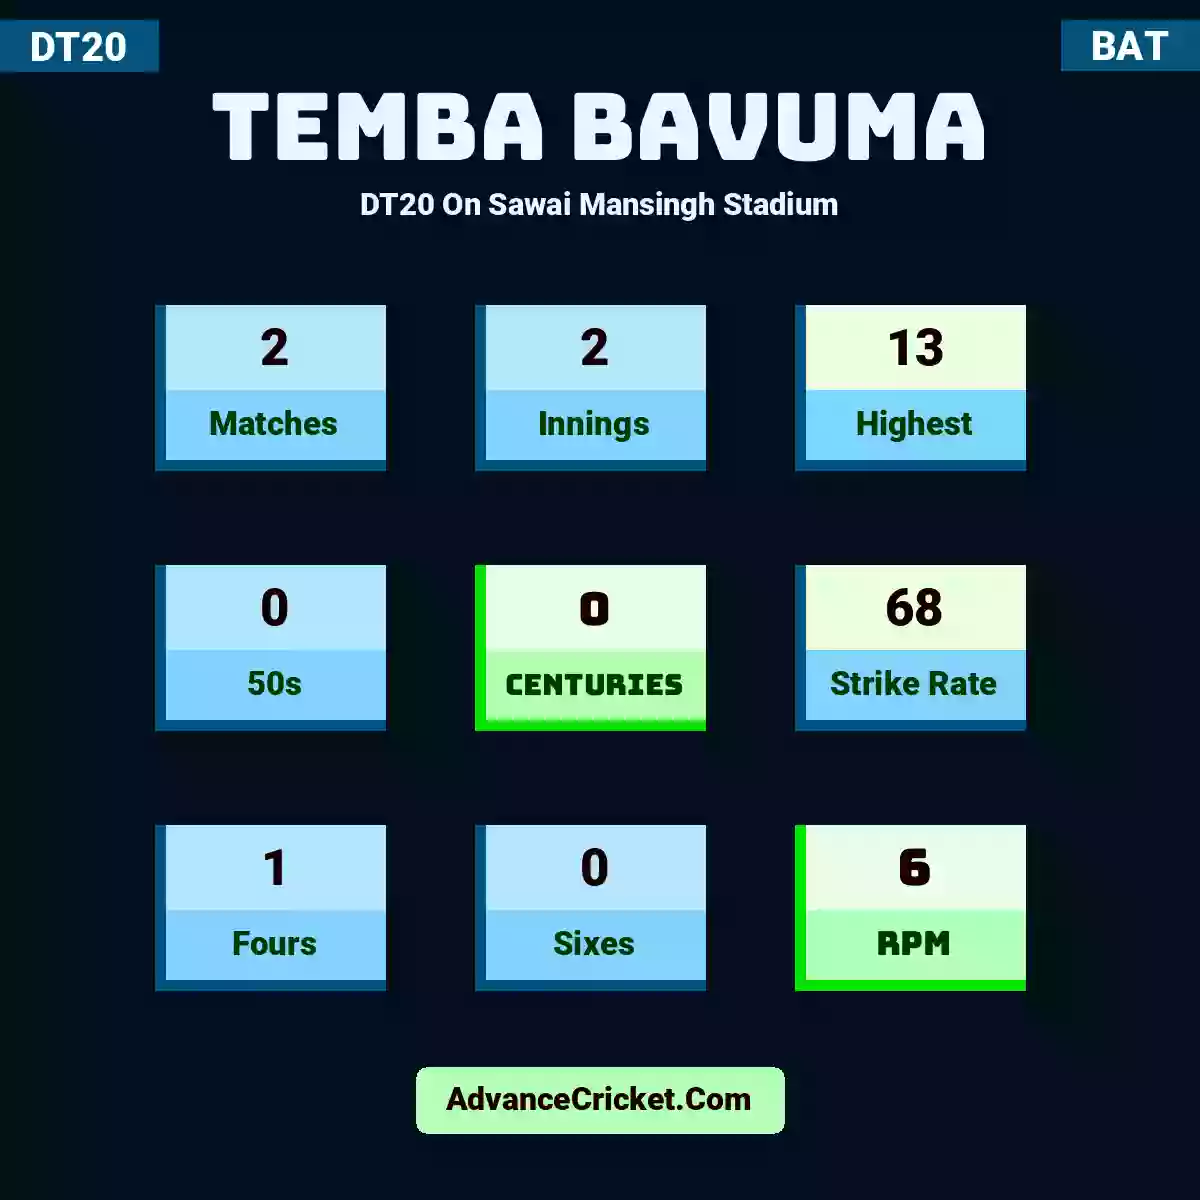 Temba Bavuma DT20  On Sawai Mansingh Stadium, Temba Bavuma played 2 matches, scored 13 runs as highest, 0 half-centuries, and 0 centuries, with a strike rate of 68. T.Bavuma hit 1 fours and 0 sixes, with an RPM of 6.